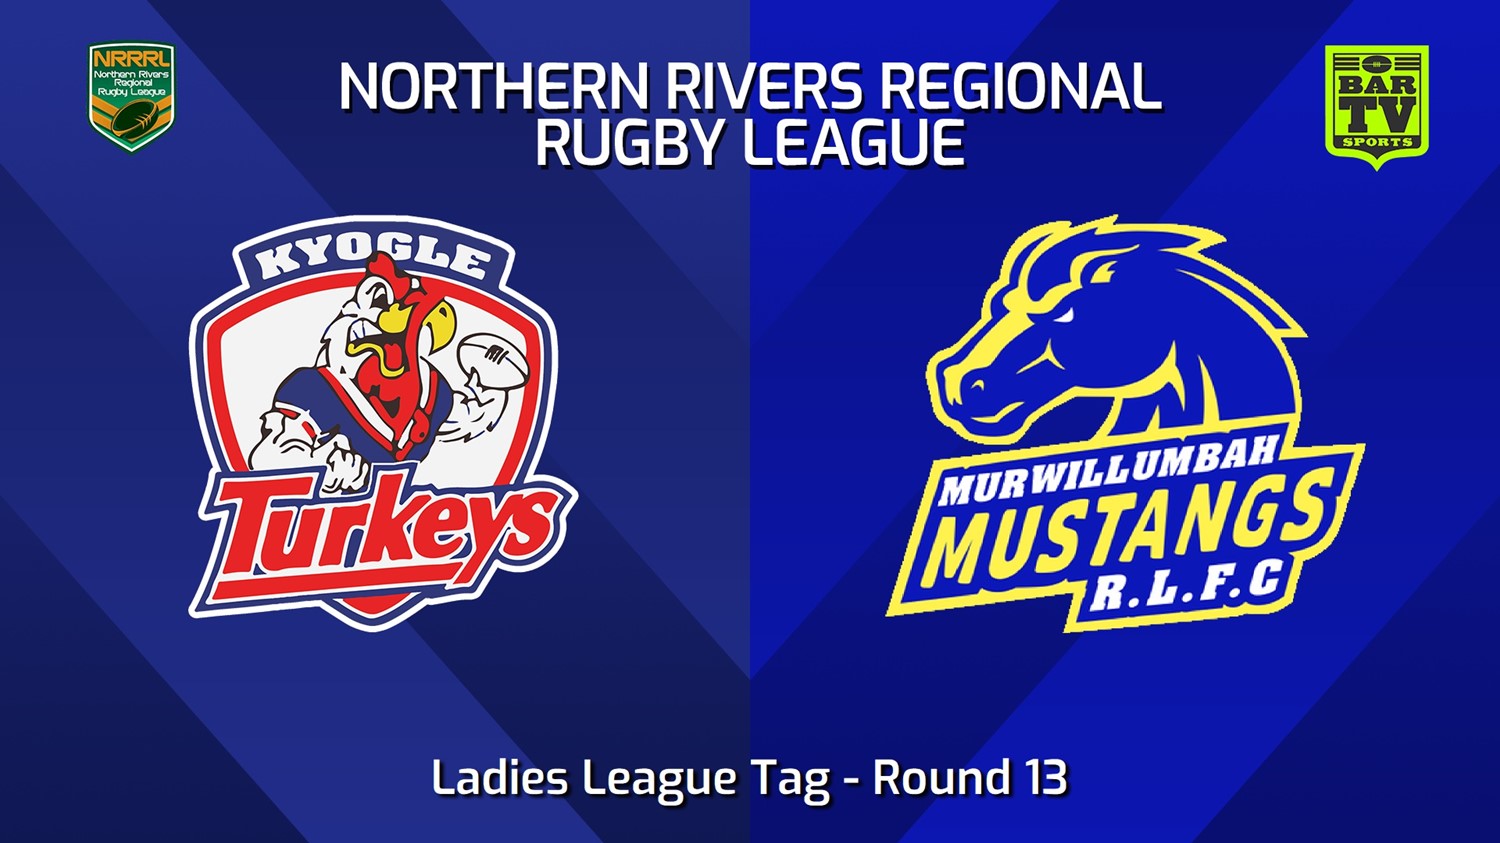 240706-video-Northern Rivers Round 13 - Ladies League Tag - Kyogle Turkeys v Murwillumbah Mustangs Slate Image